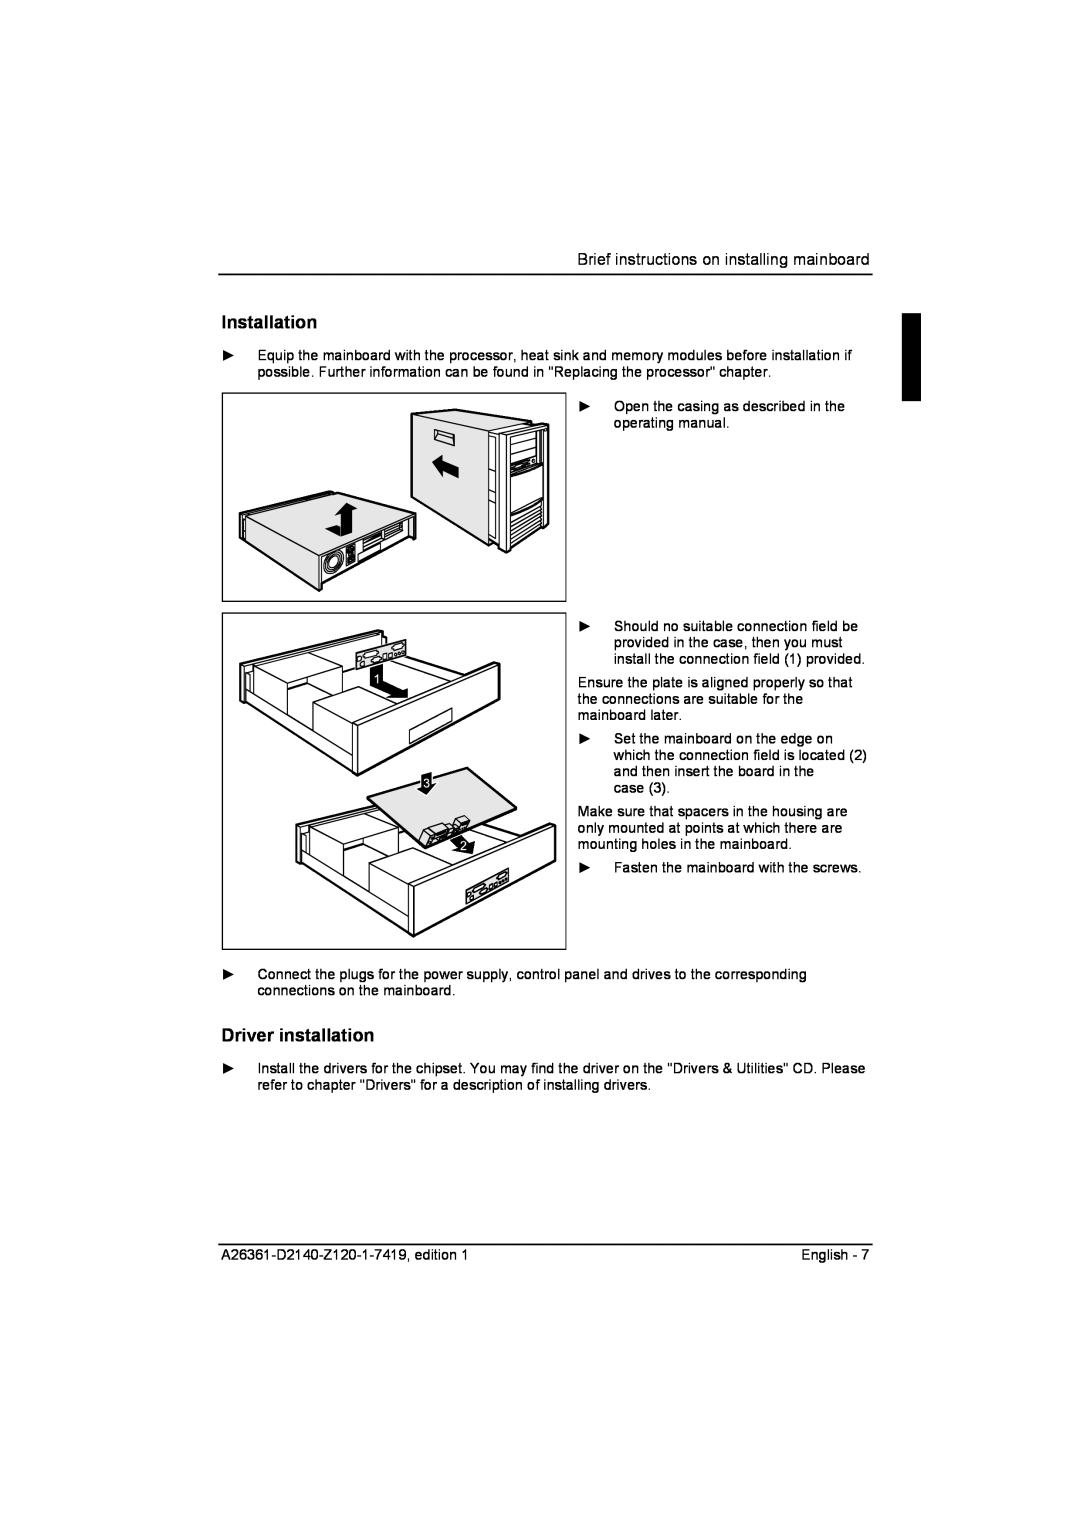 Eclipse - Fujitsu Ten D2140 technical manual Installation, Driver installation, Brief instructions on installing mainboard 